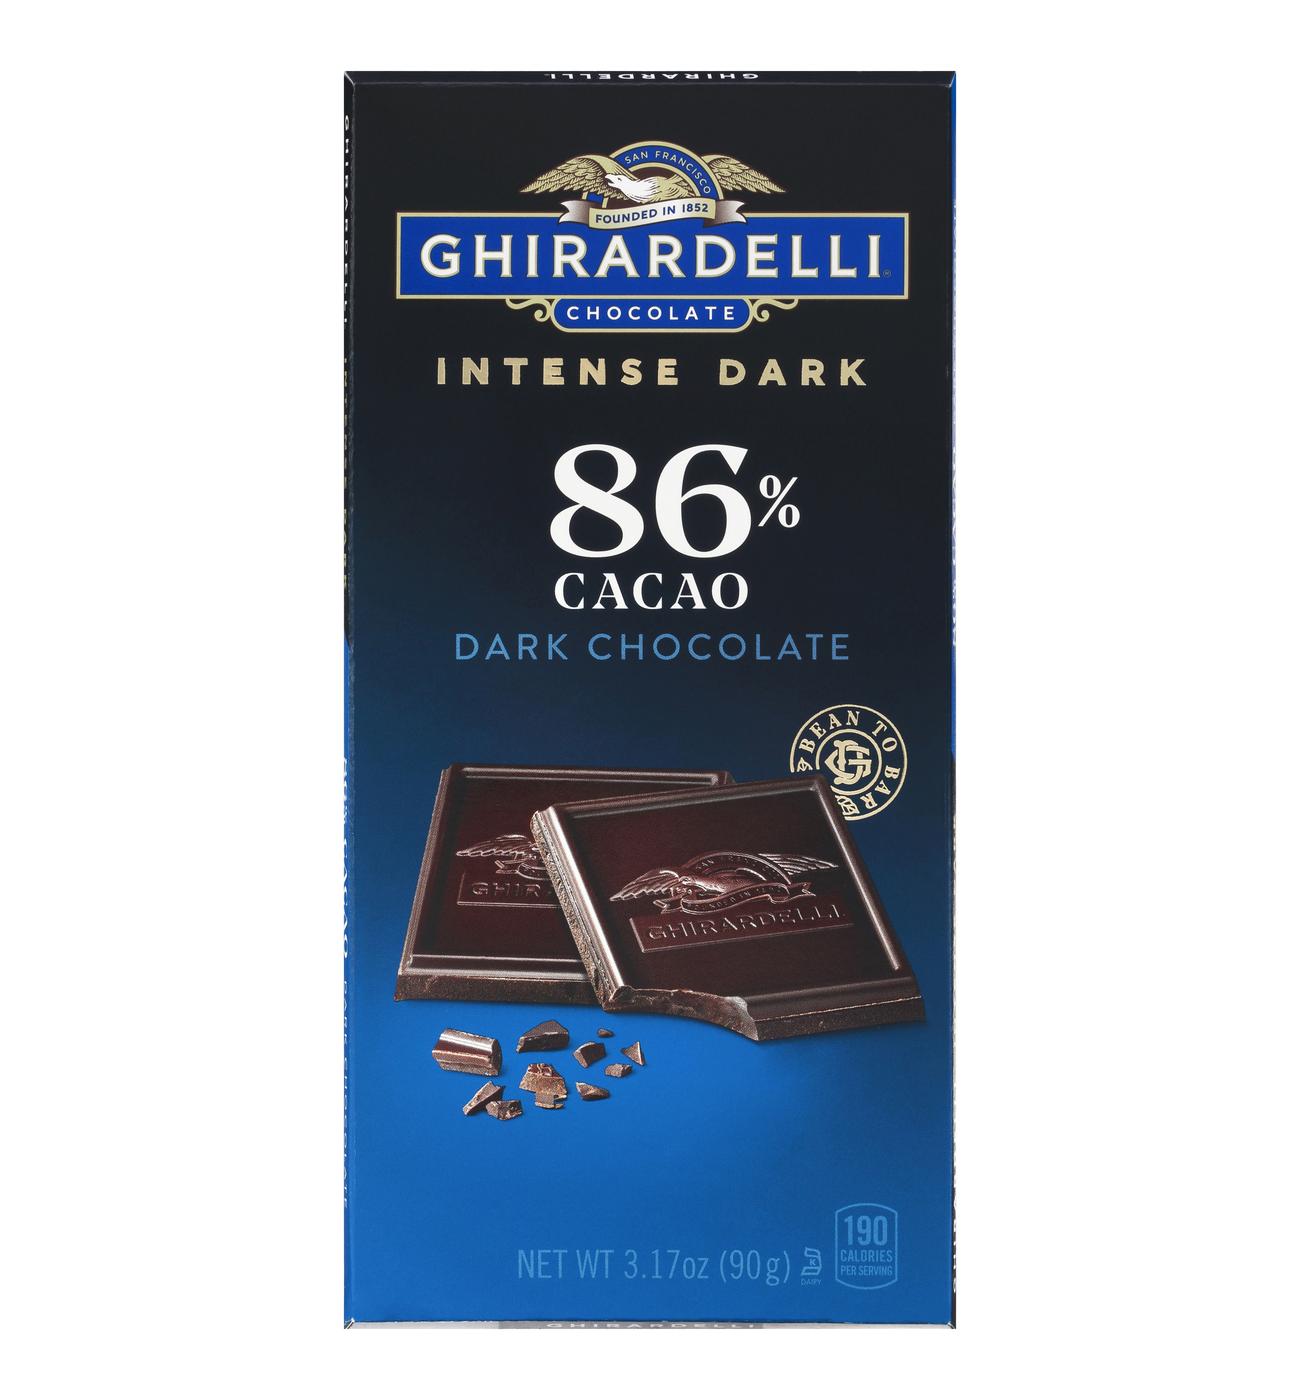 Ghirardelli Intense Dark 86% Cacao Dark Chocolate Bar; image 1 of 4